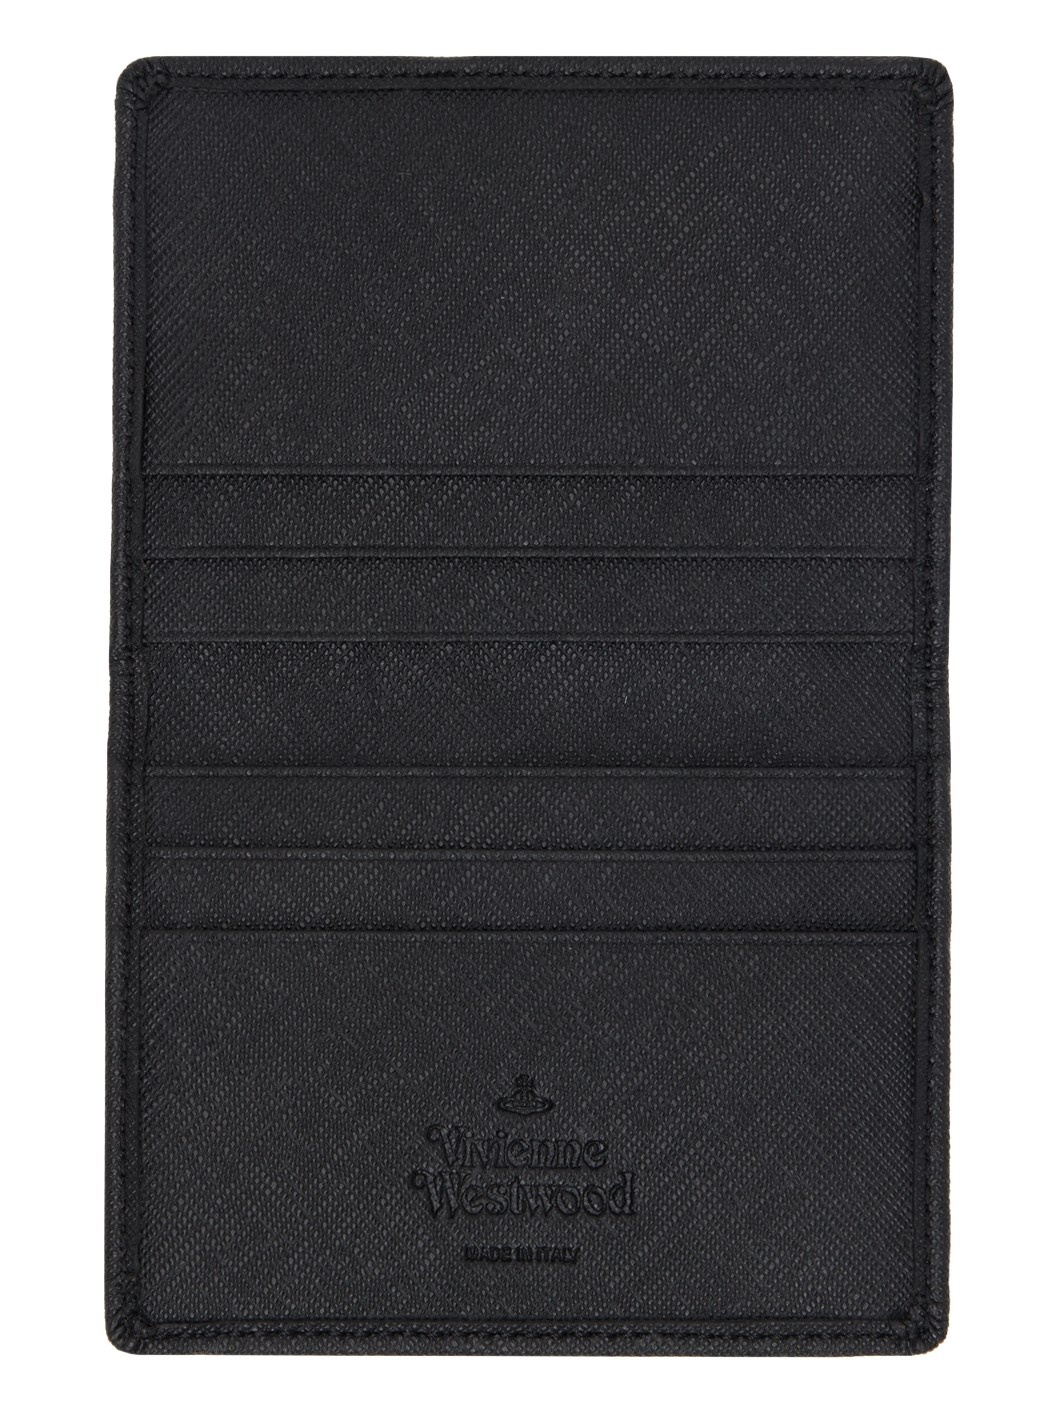 Black Hardware Bifold Card Holder - 3